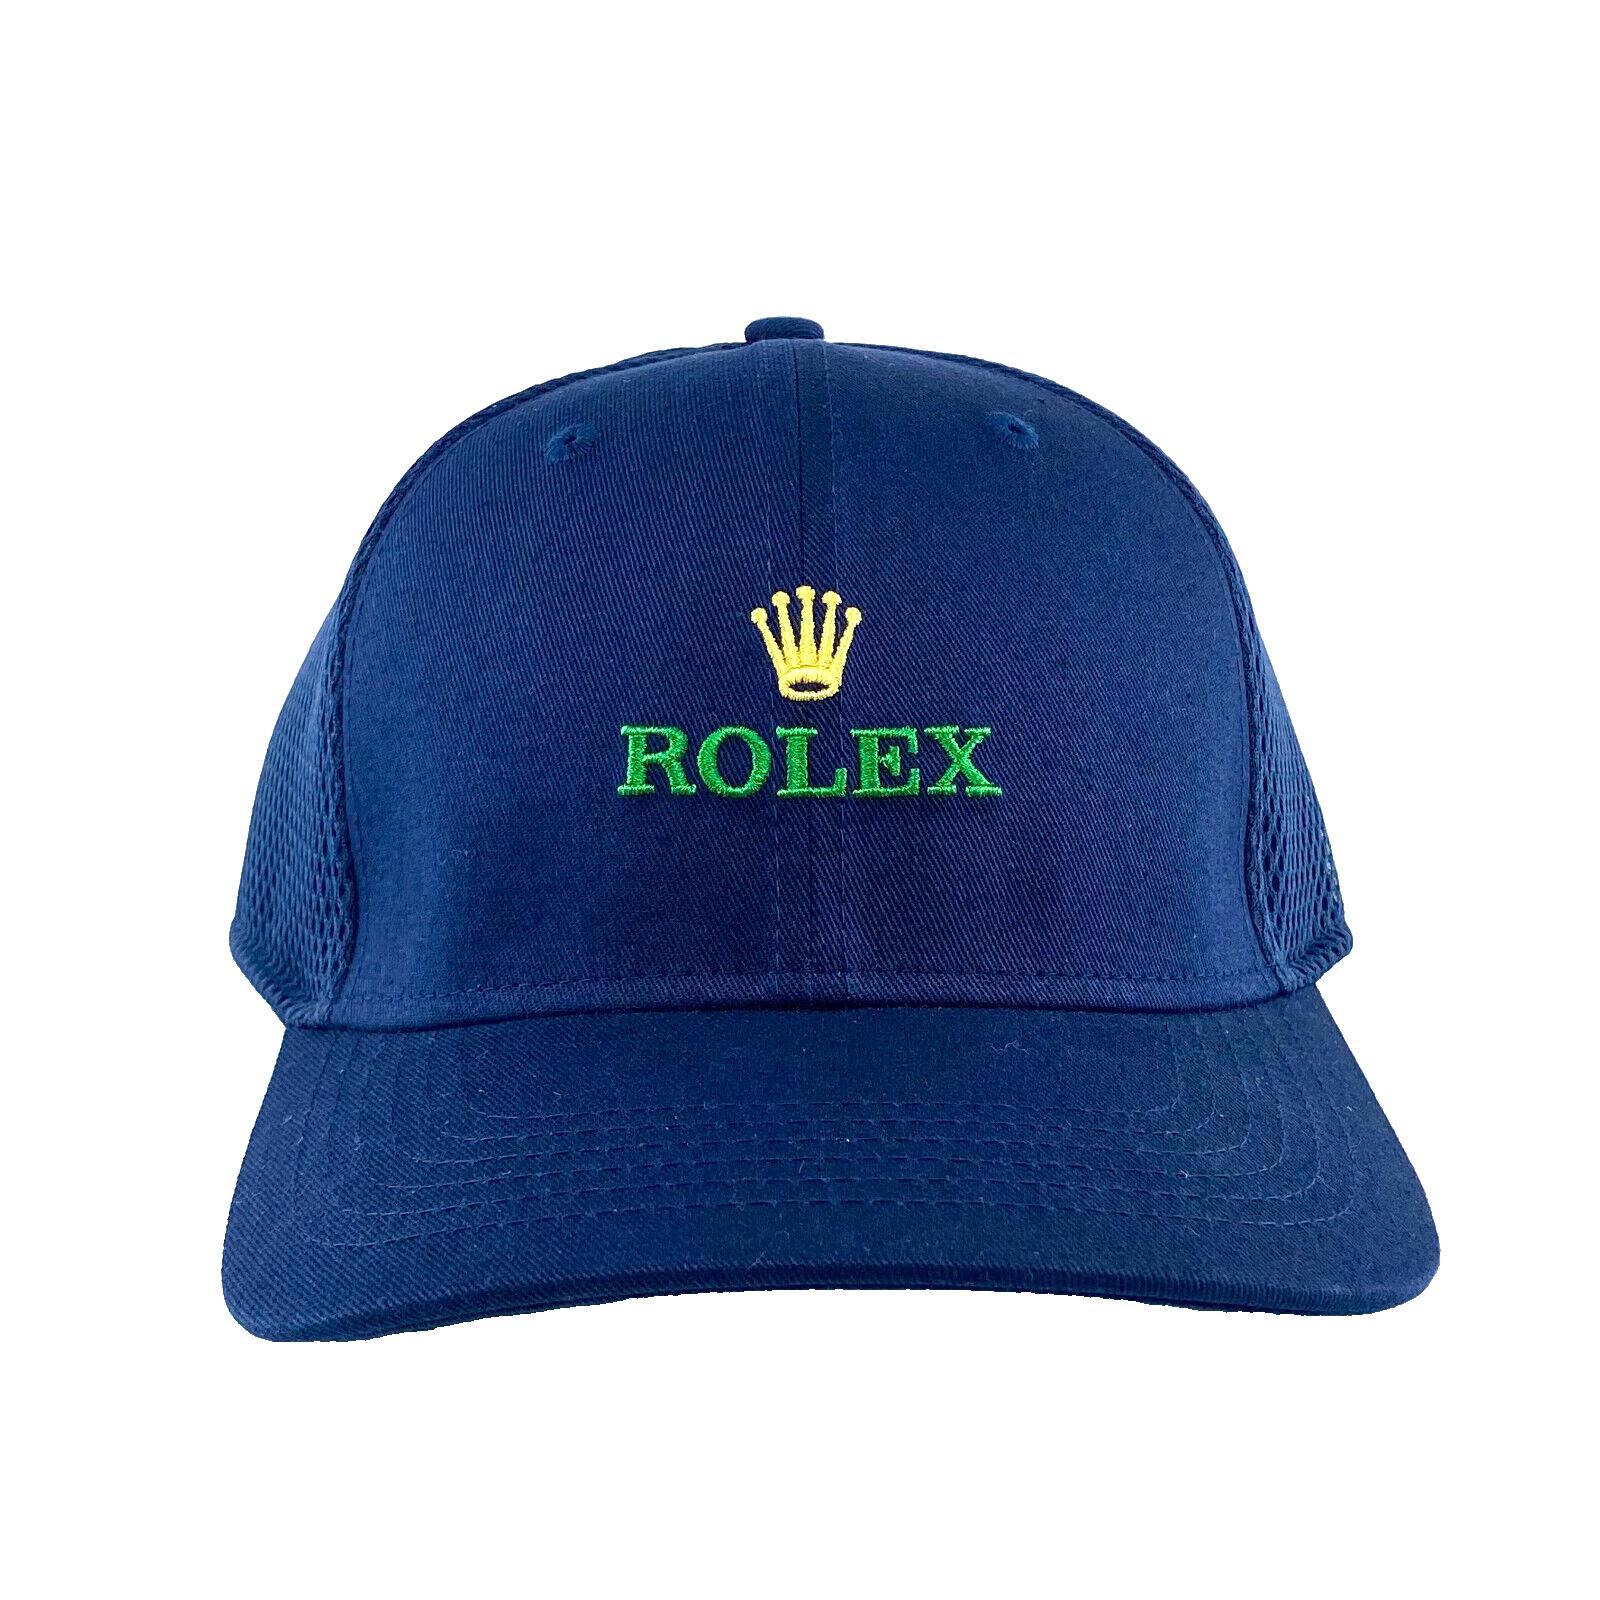 Rolex cap blue 